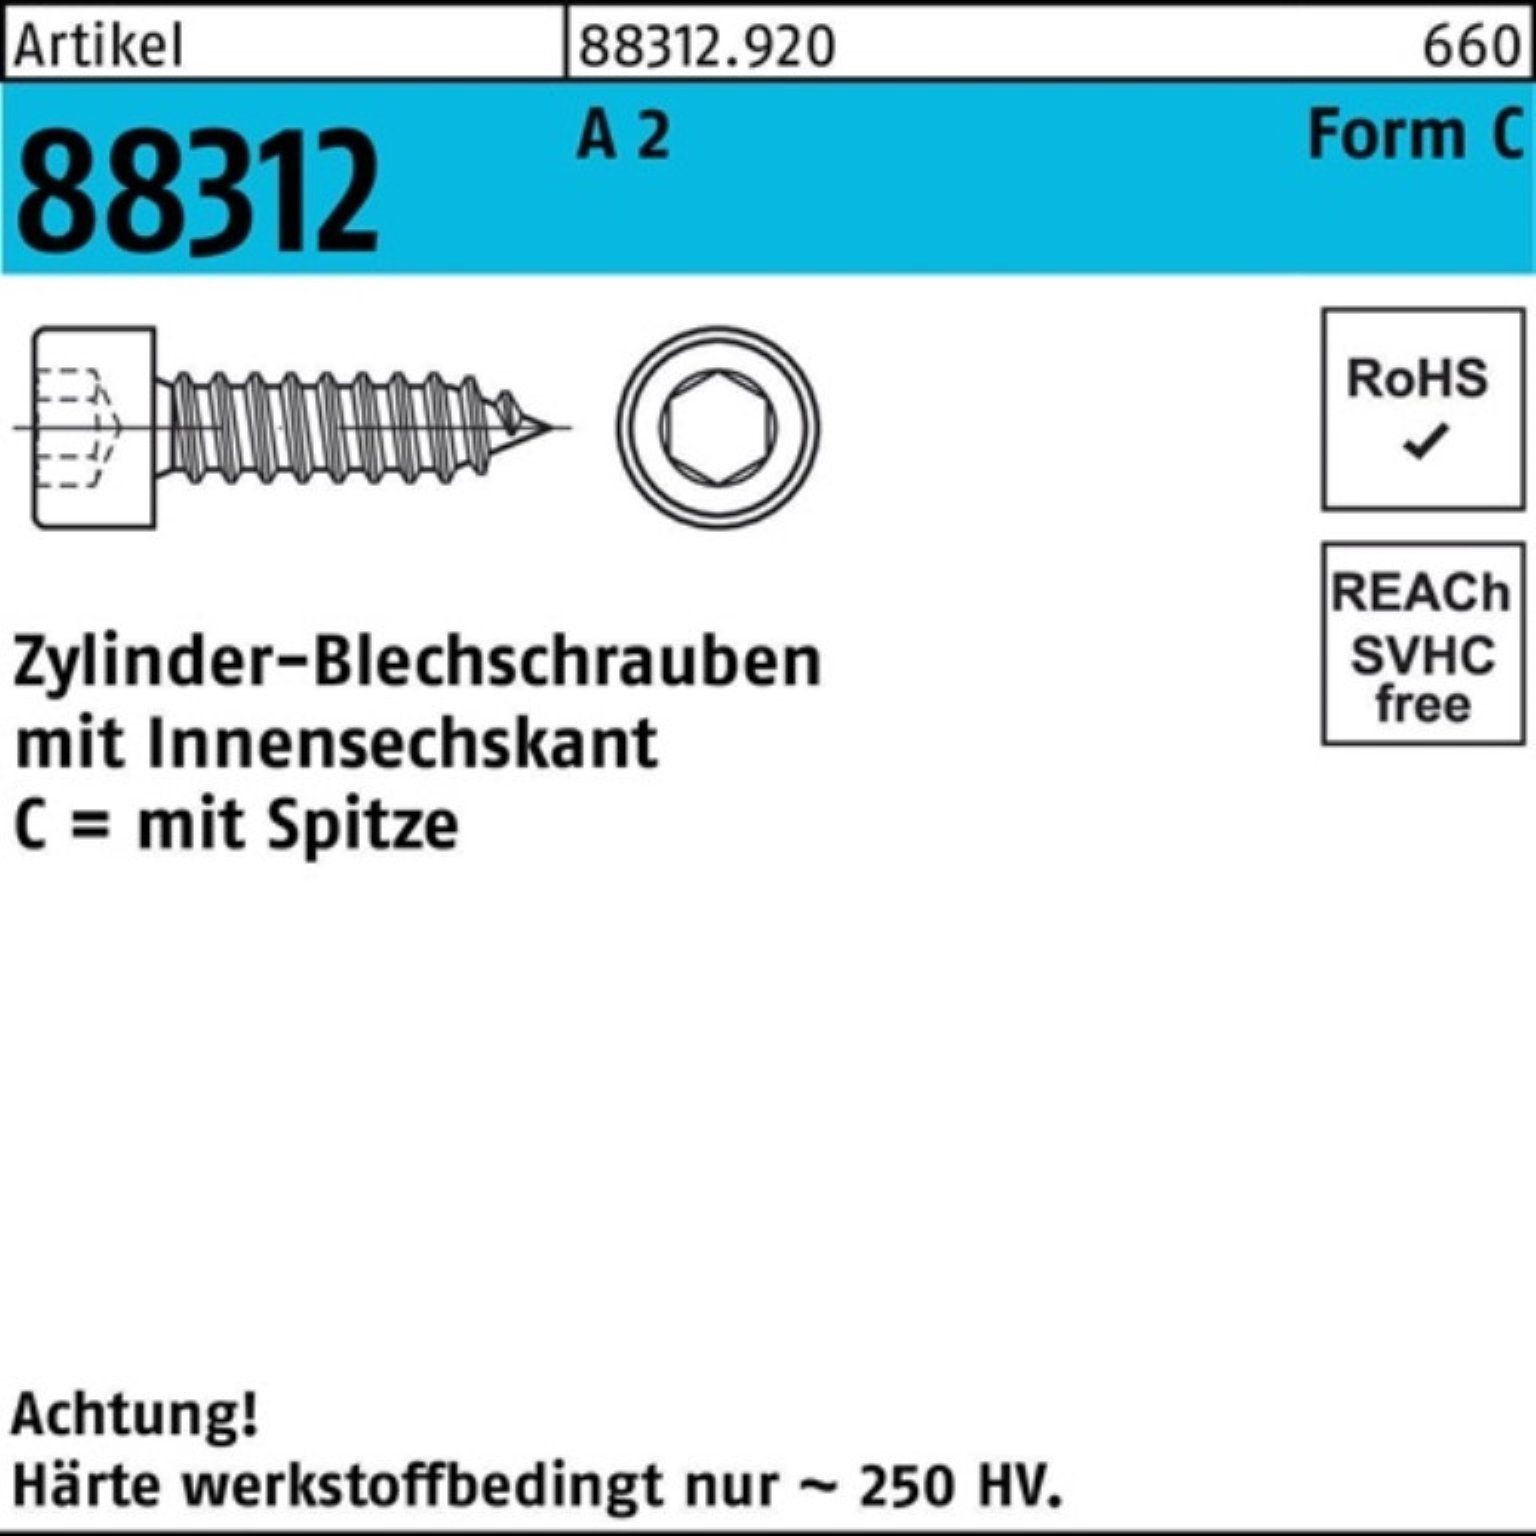 Reyher Blechschraube 200er Pack Zylinderblechschraube R 88312 Spitze/Innen-6kt C 6,3x 19 A